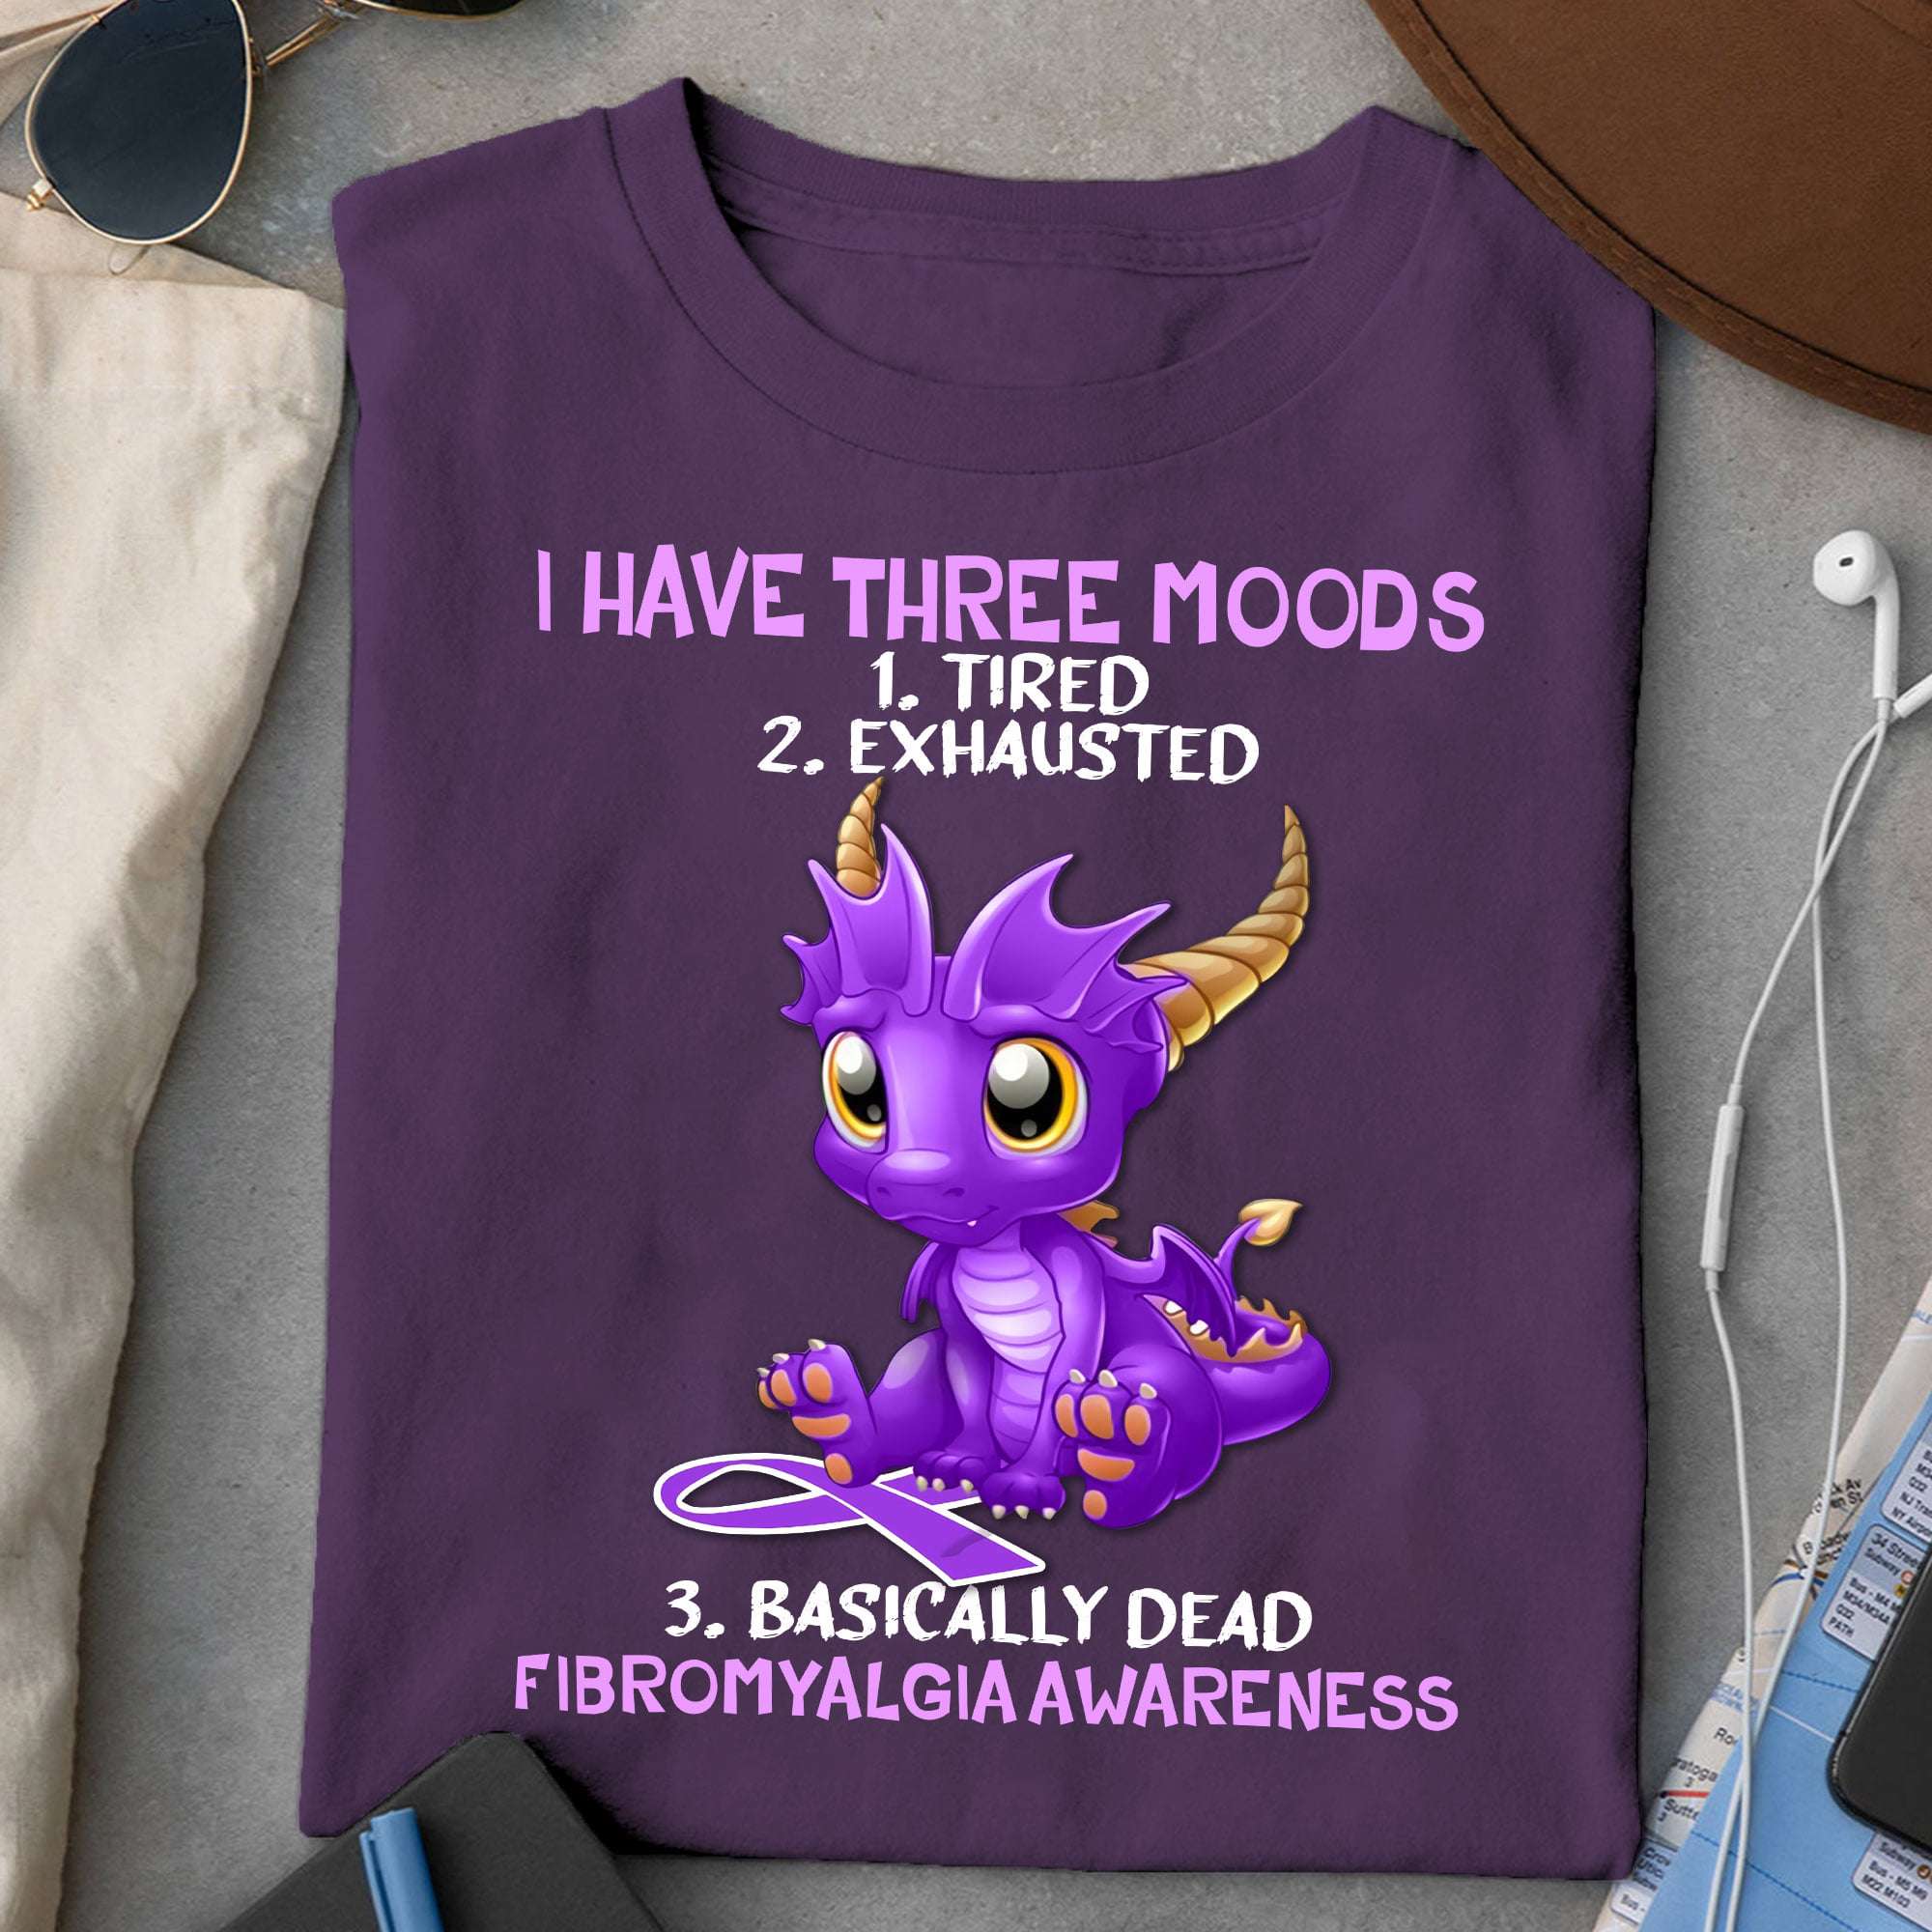 Fibromyalgia Dragon - I have three moods tired exhausted basically dead fibromyalgia awareness